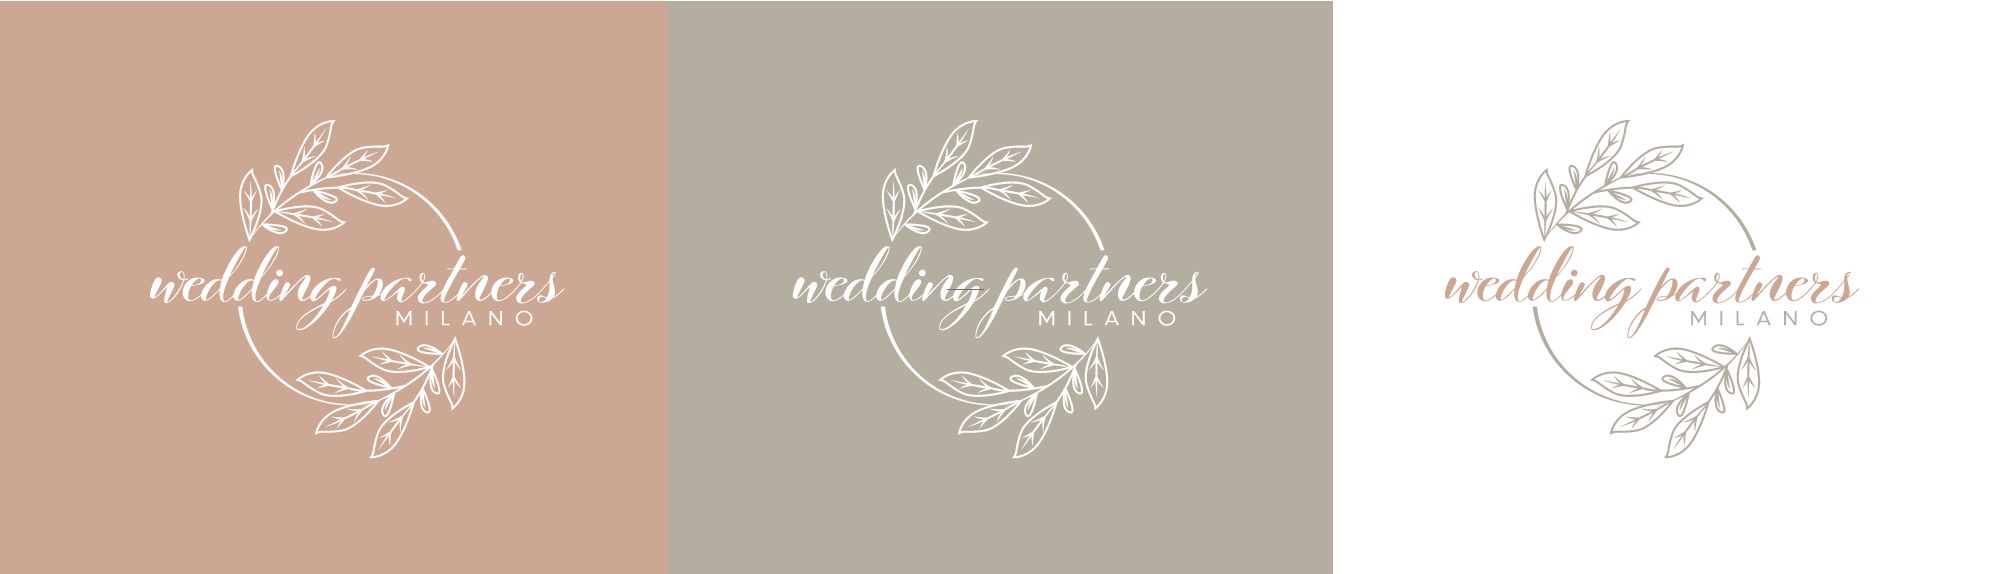 randomlab-progetti-wedding-partner-milano-logo-background